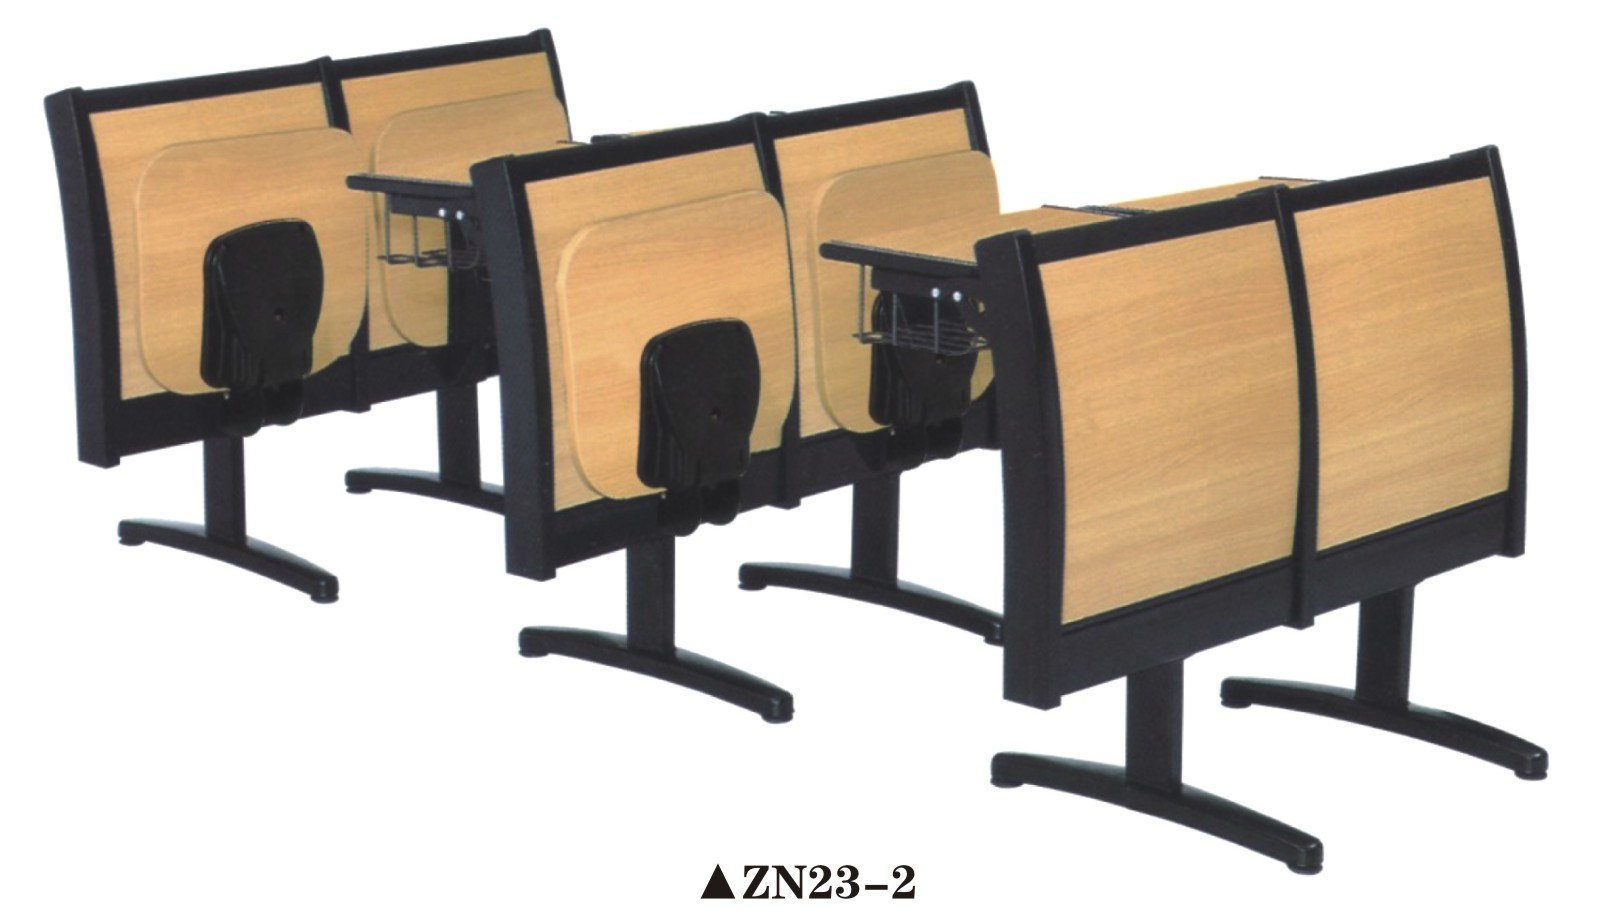 Hot Sale School Desk and Chair/School Desk/Children Desk